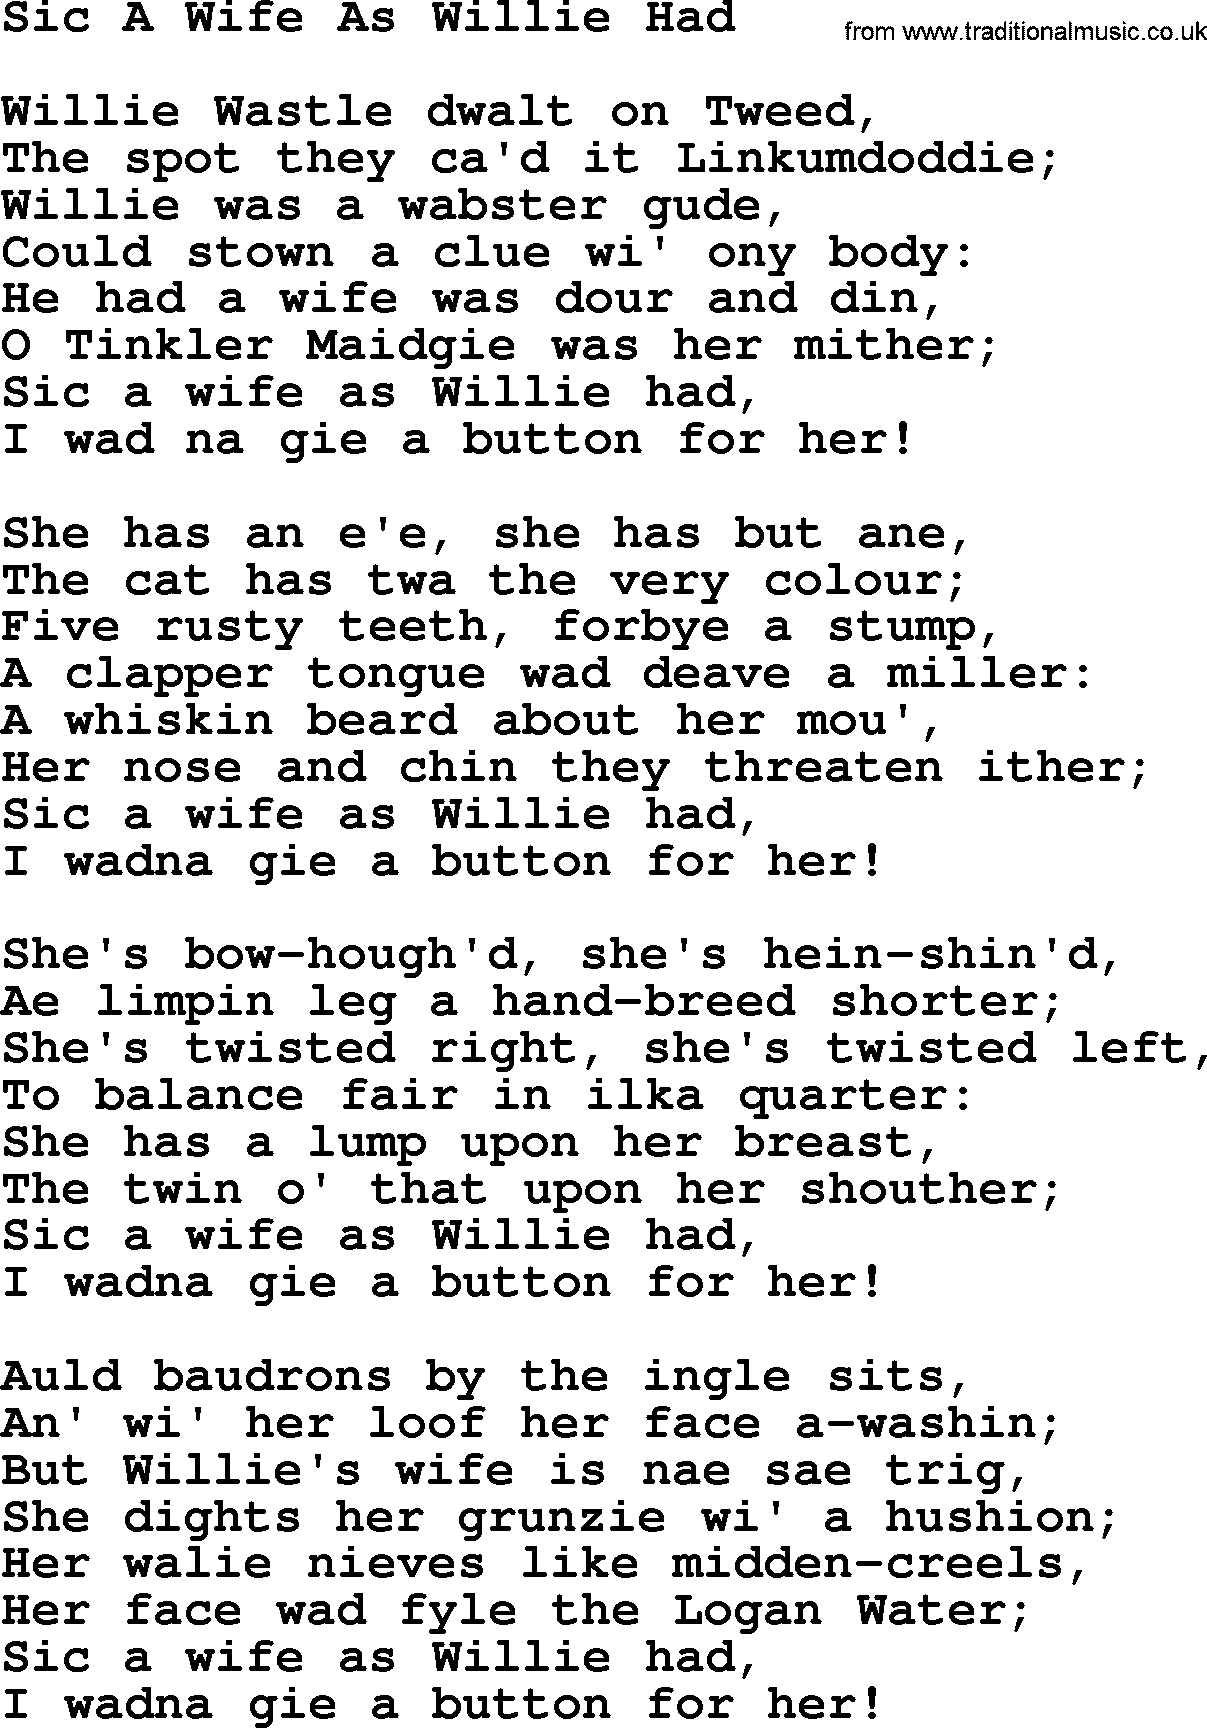 Robert Burns Songs & Lyrics: Sic A Wife As Willie Had